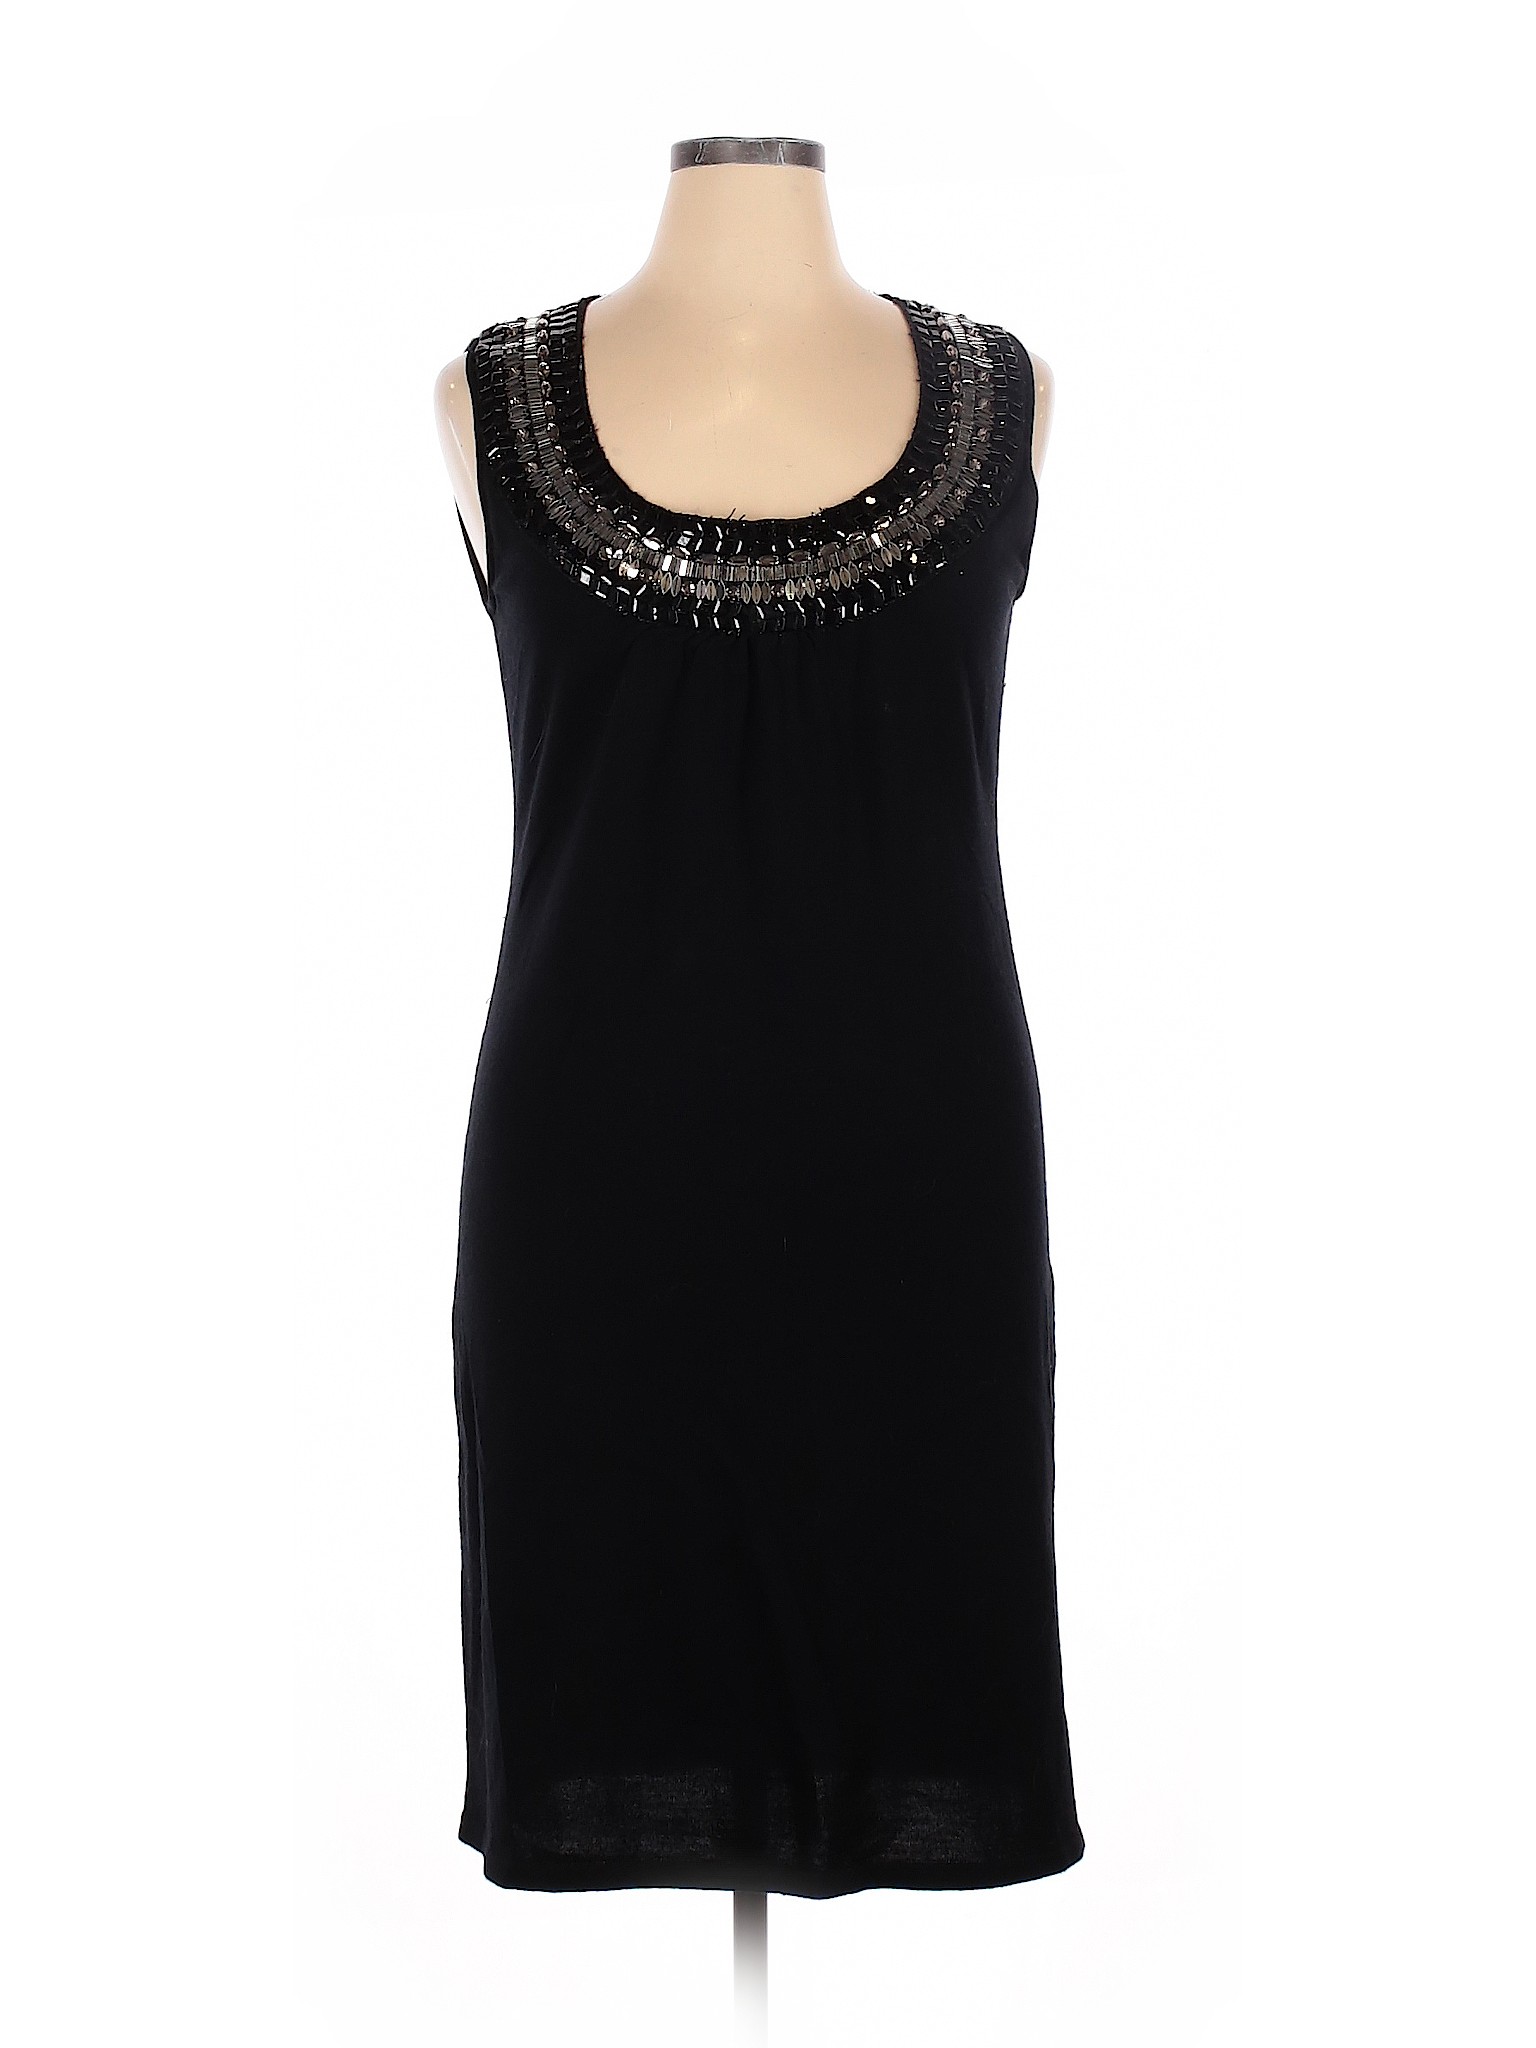 Tory Burch 100% Merino Wool Solid Black Cocktail Dress Size XL - 85% ...